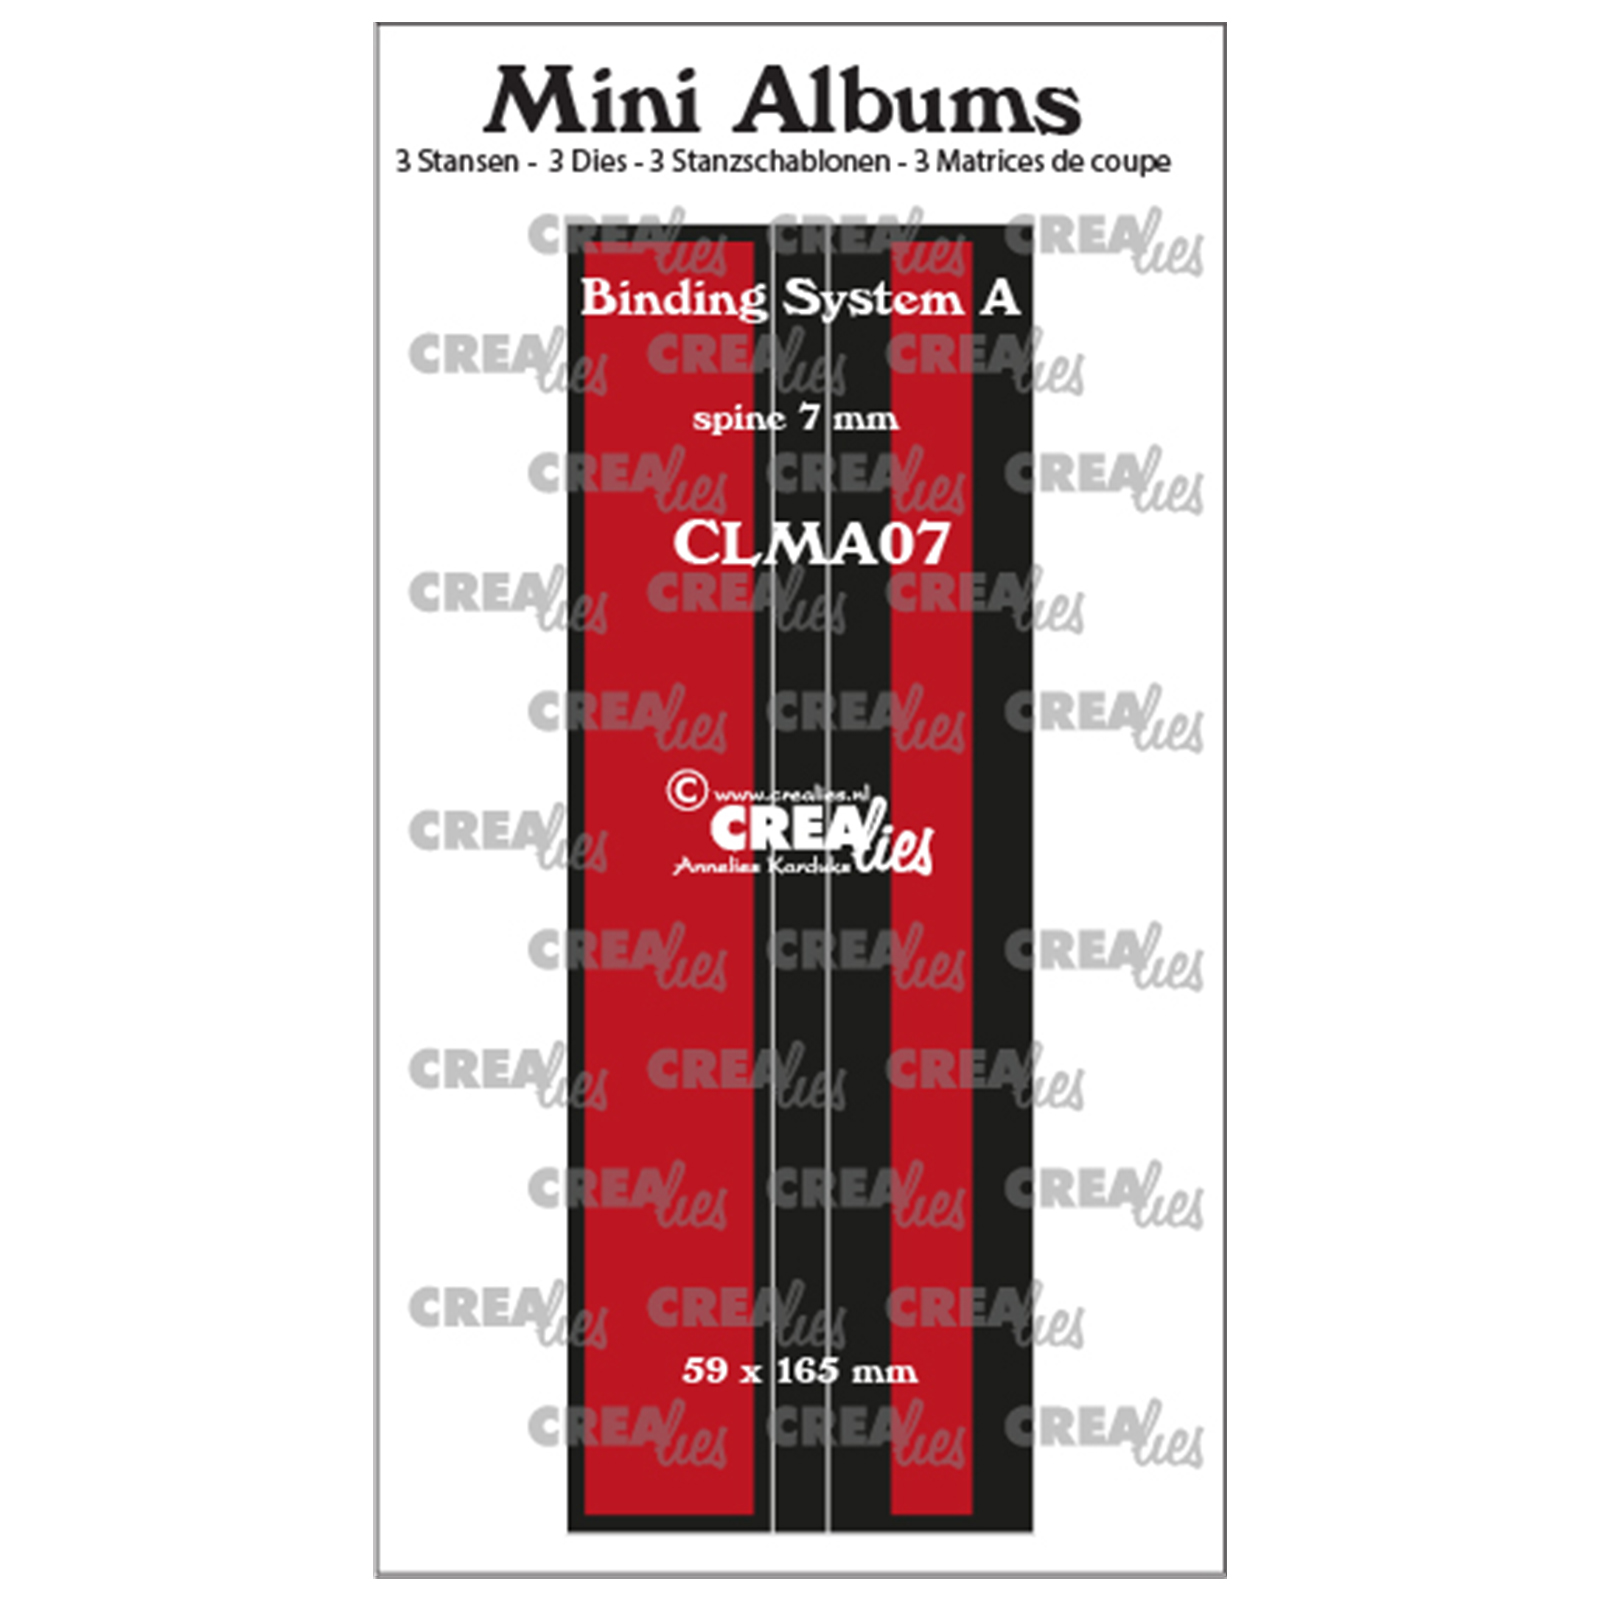 Crealies • Mini albums cutting die binding system smooth